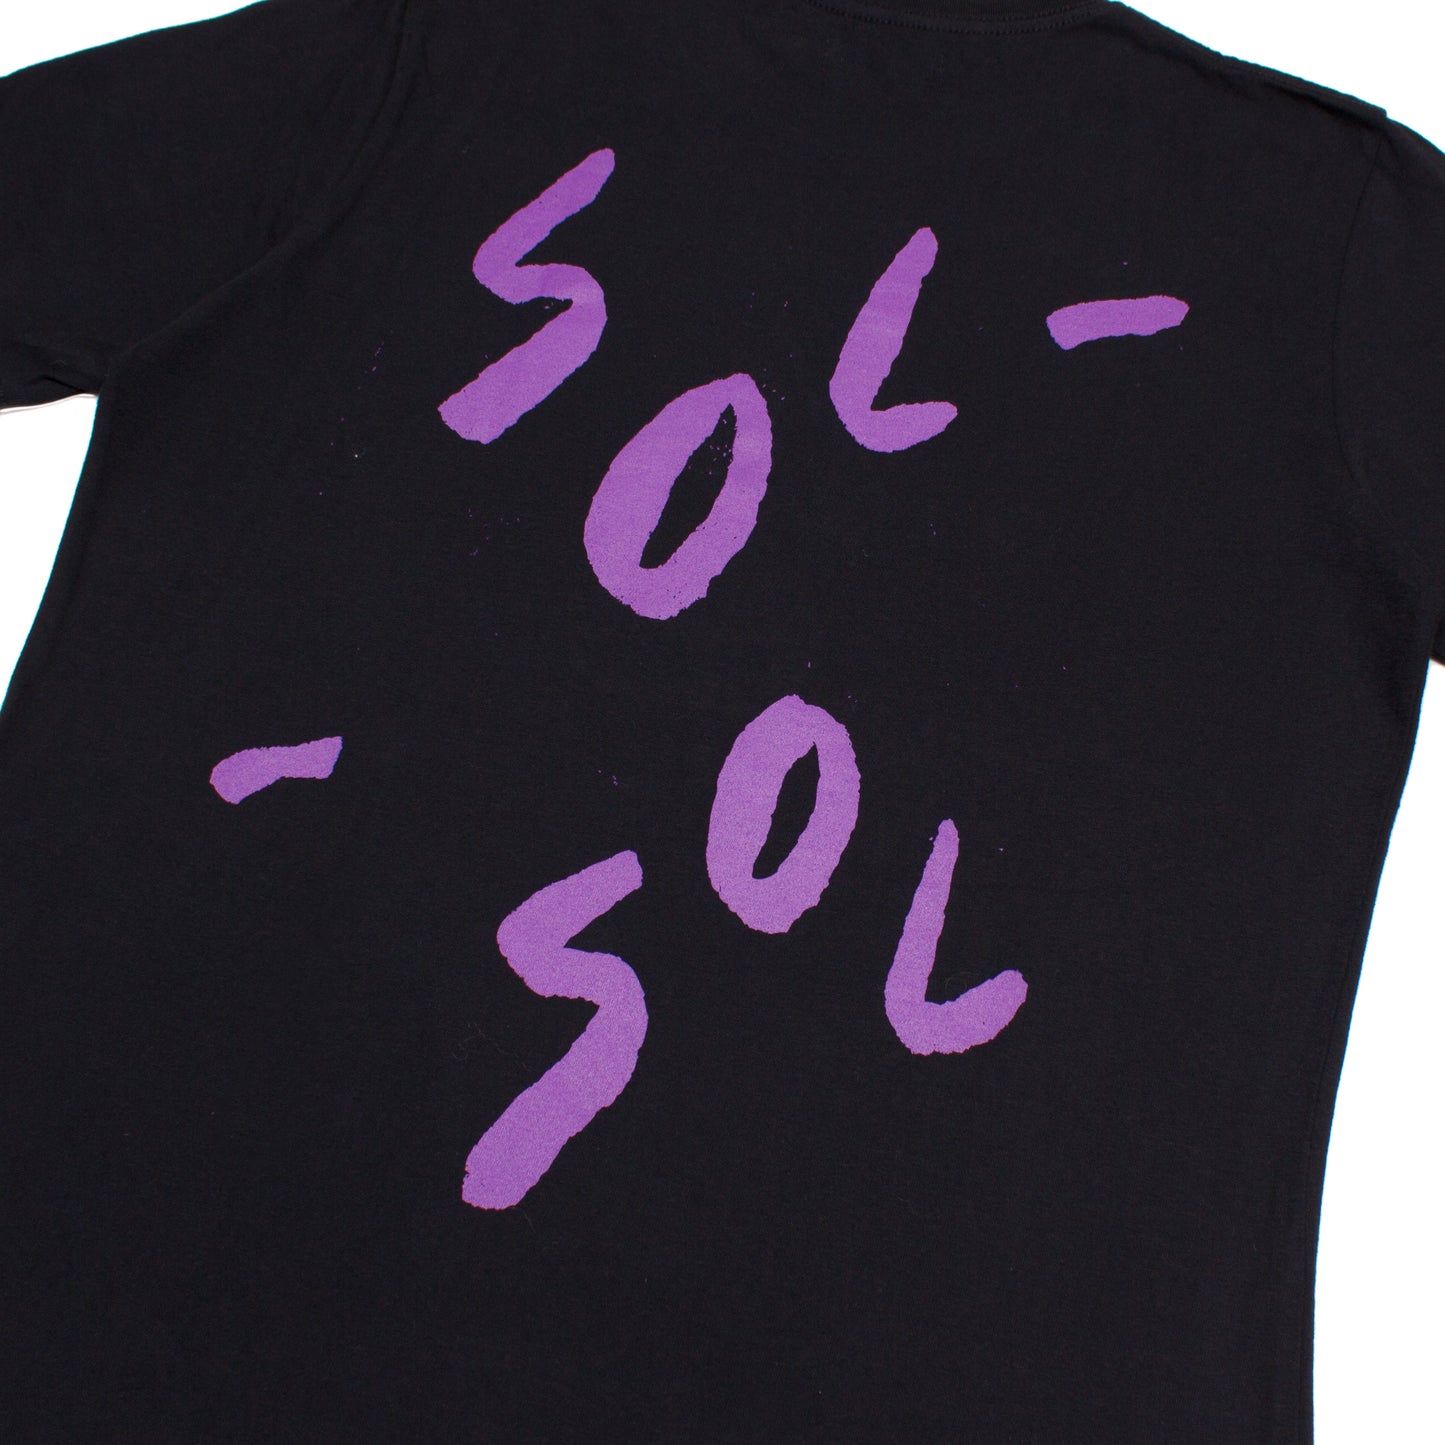 Sol Sol "Jumbled Logo" T-shirt - Black/Purple